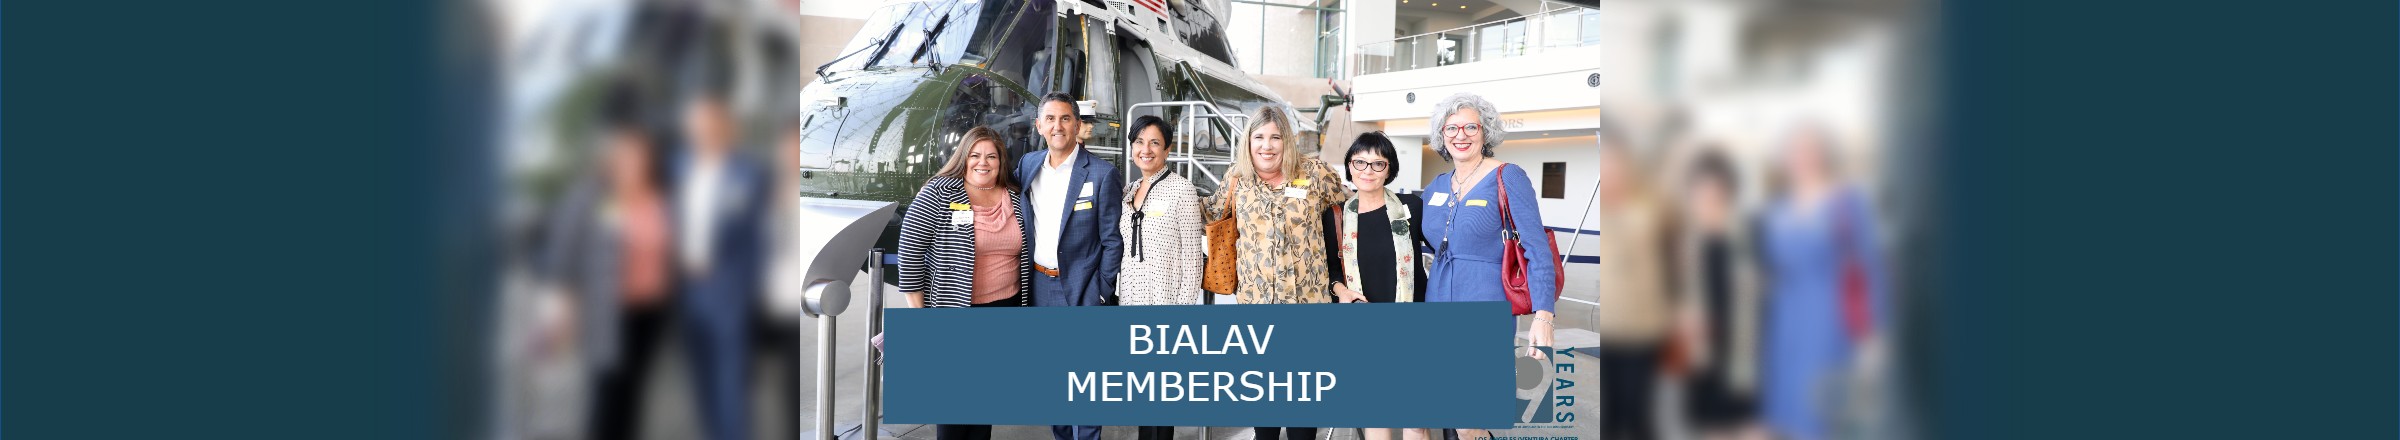 bialav-membership-header-3